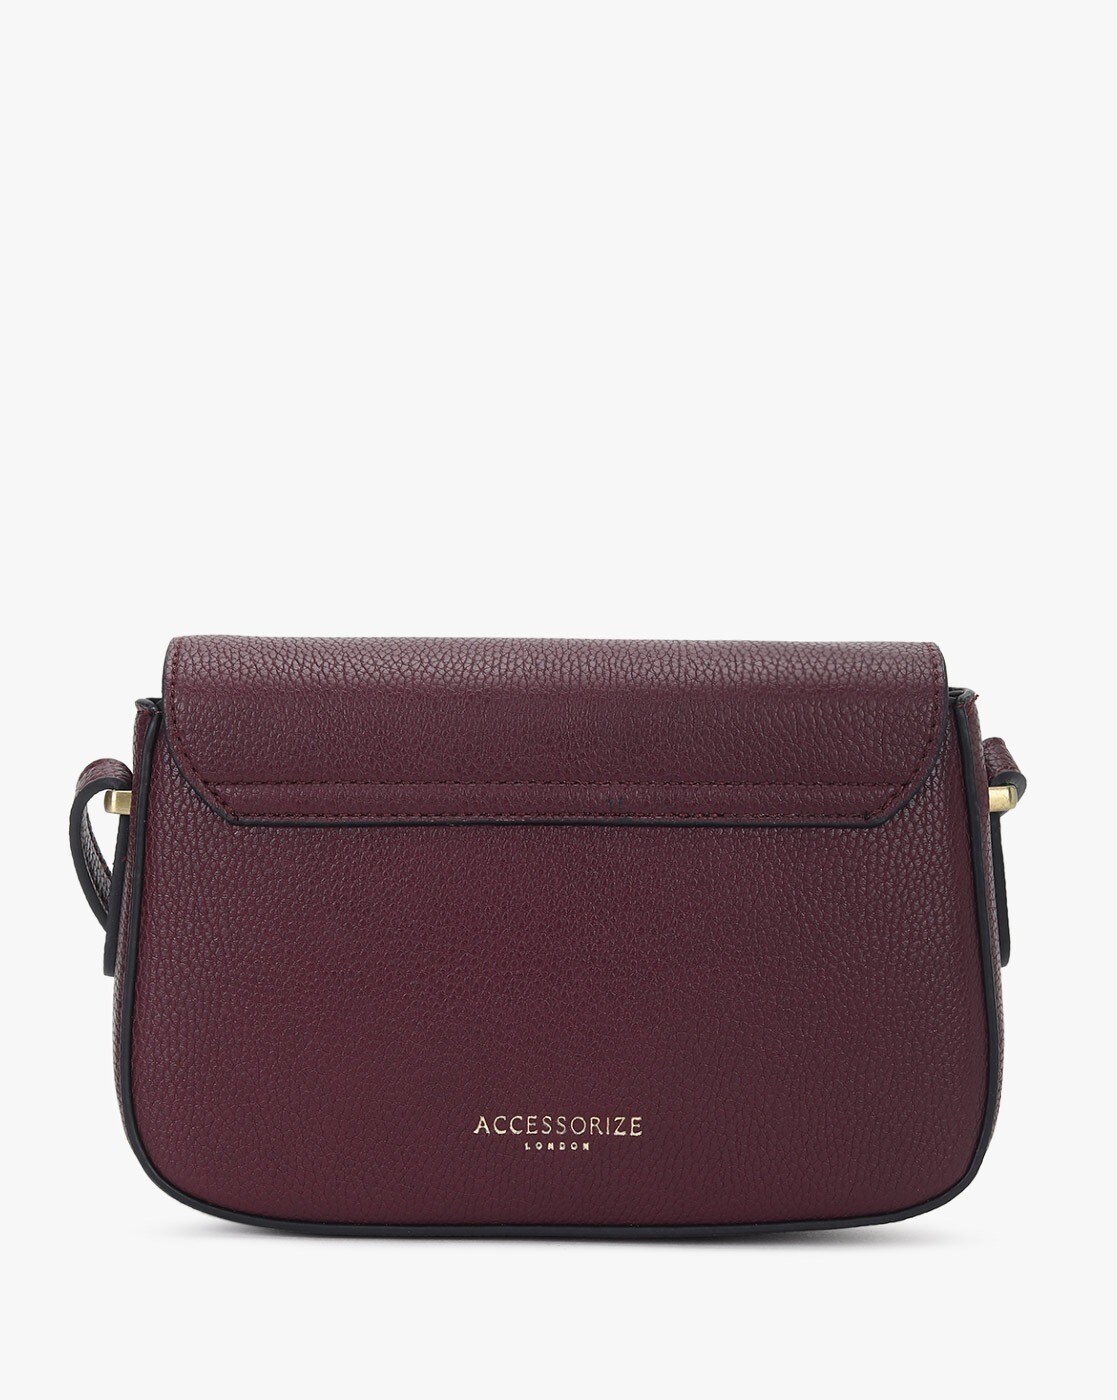 Kate Spade burgundy tote bag purse | Burgundy tote, Tote bag purse, Black handbag  tote